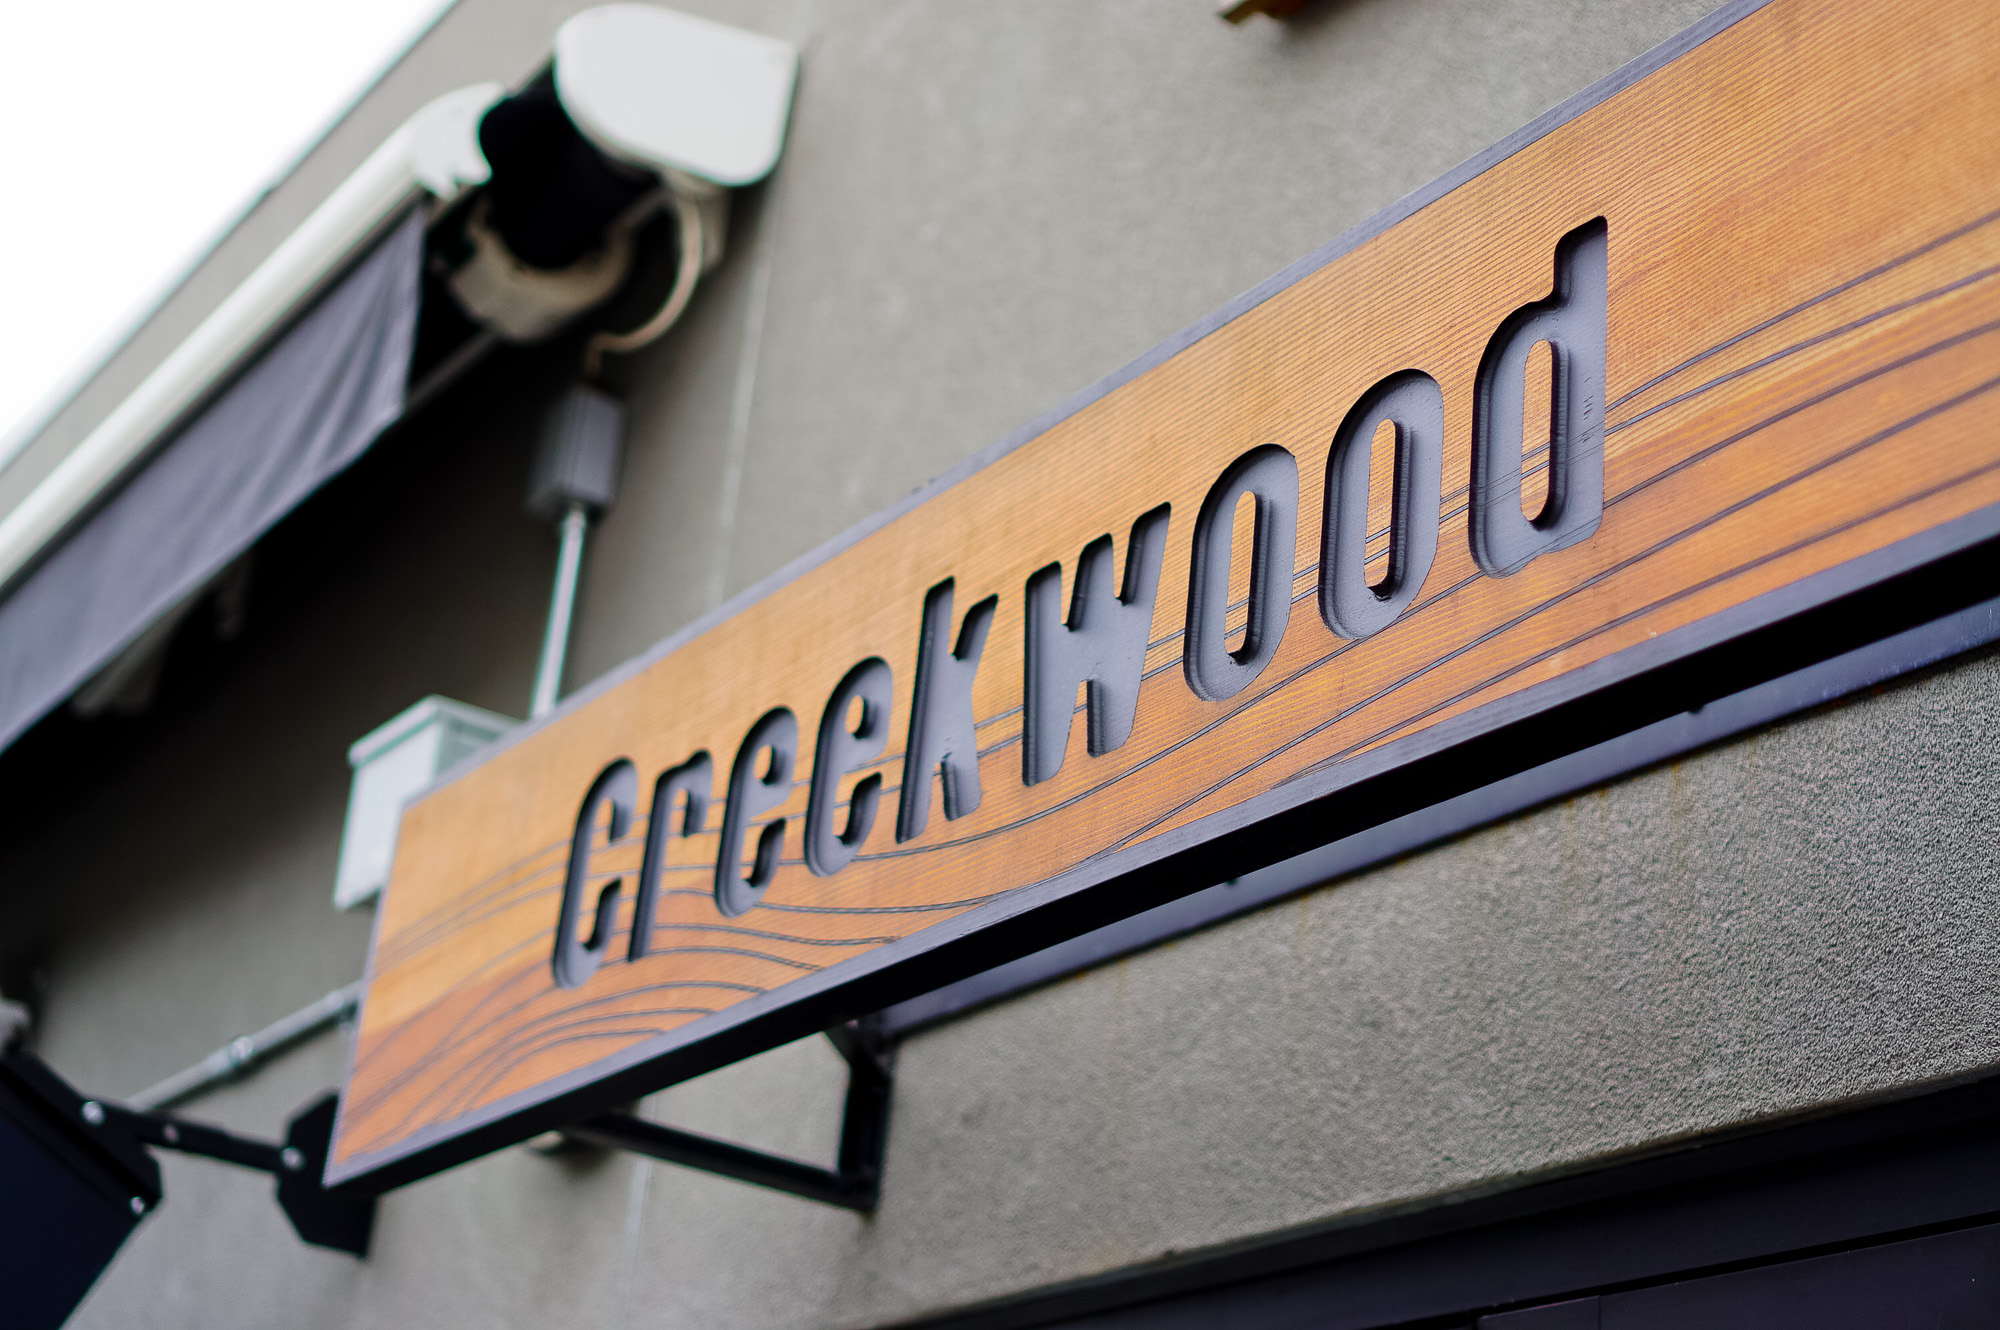 Engraved cedar wood sign on concrete walkl for Creekwood, a Californian-Italian restaurant in Berkeley, CA